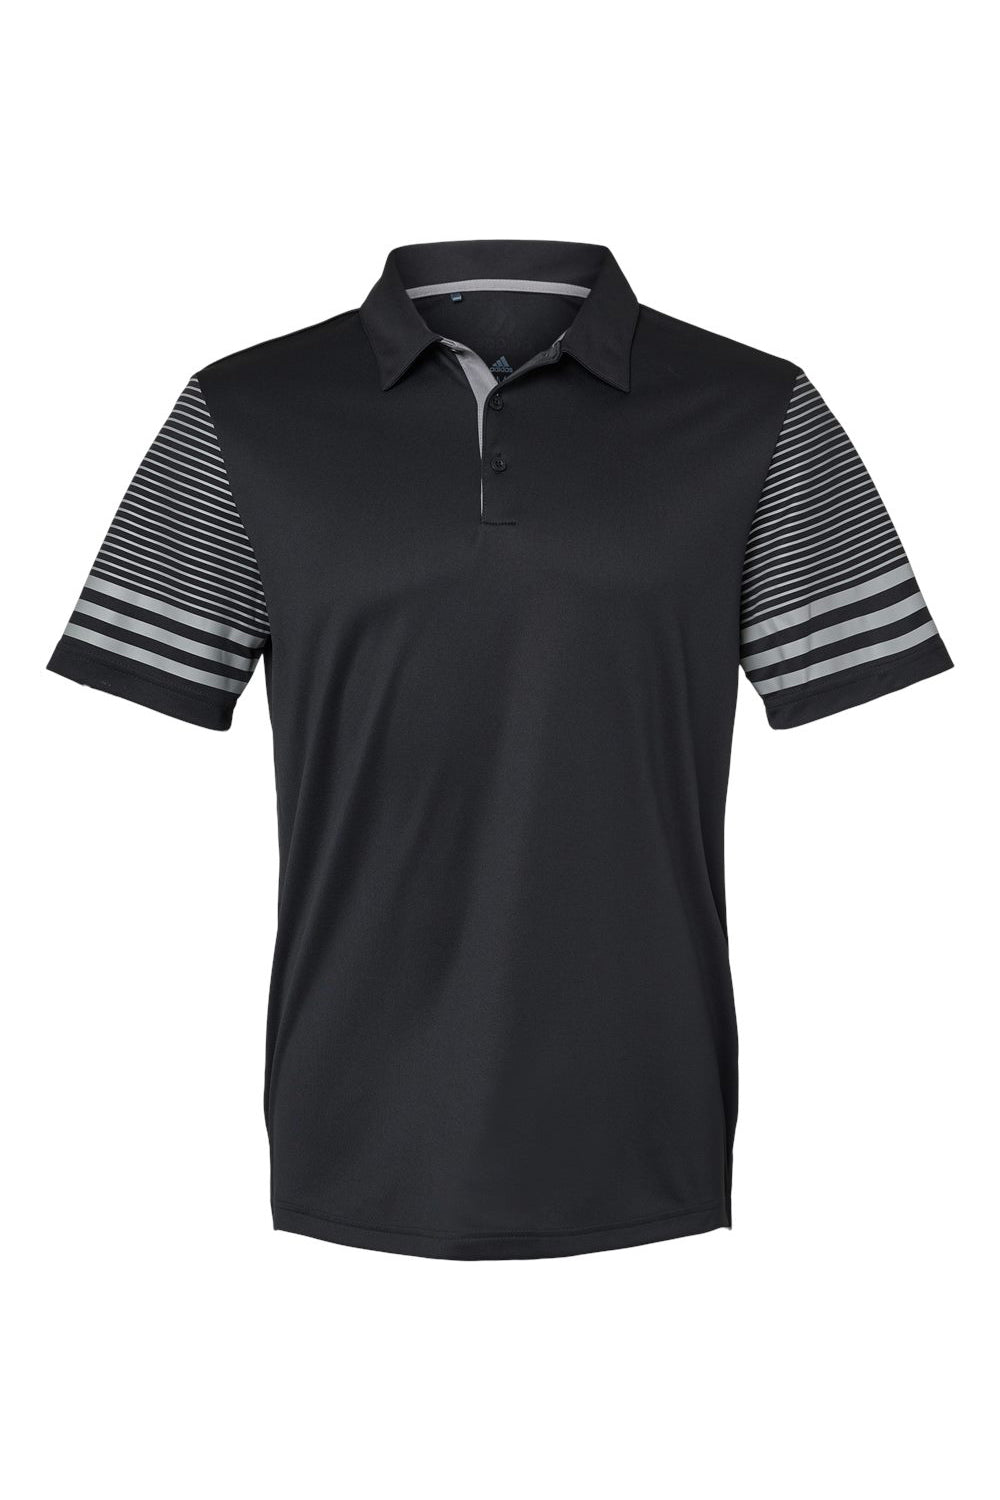 Adidas A490 Mens Striped Short Sleeve Polo Shirt Black/Grey Flat Front